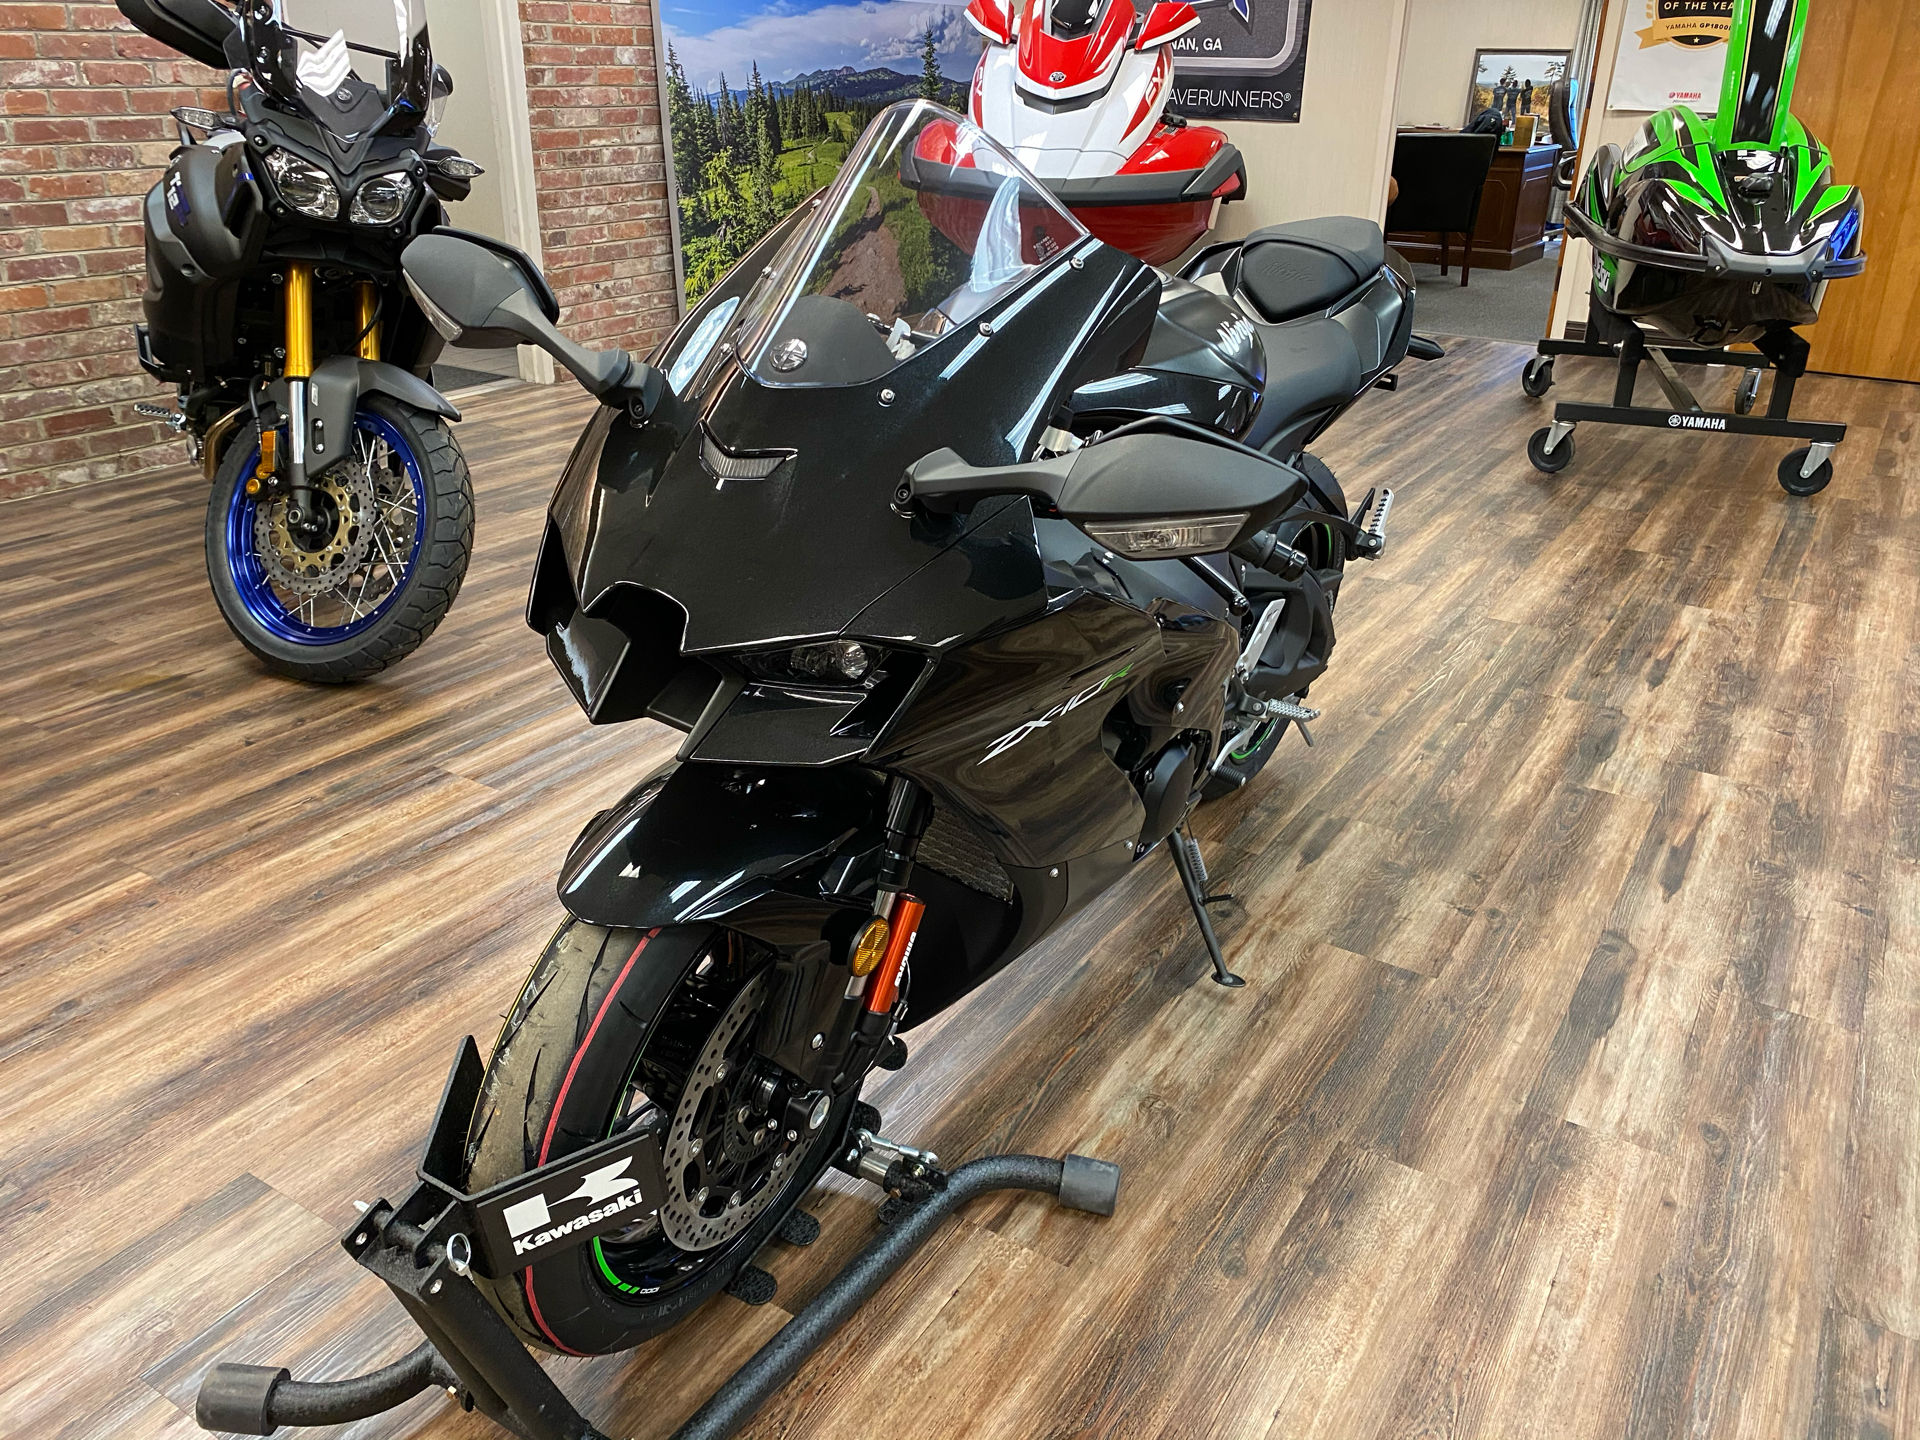 New 2021 Kawasaki Ninja ZX-10R Motorcycles Statesville, NC | Stock 000264 greatwesternmotorcycles.com